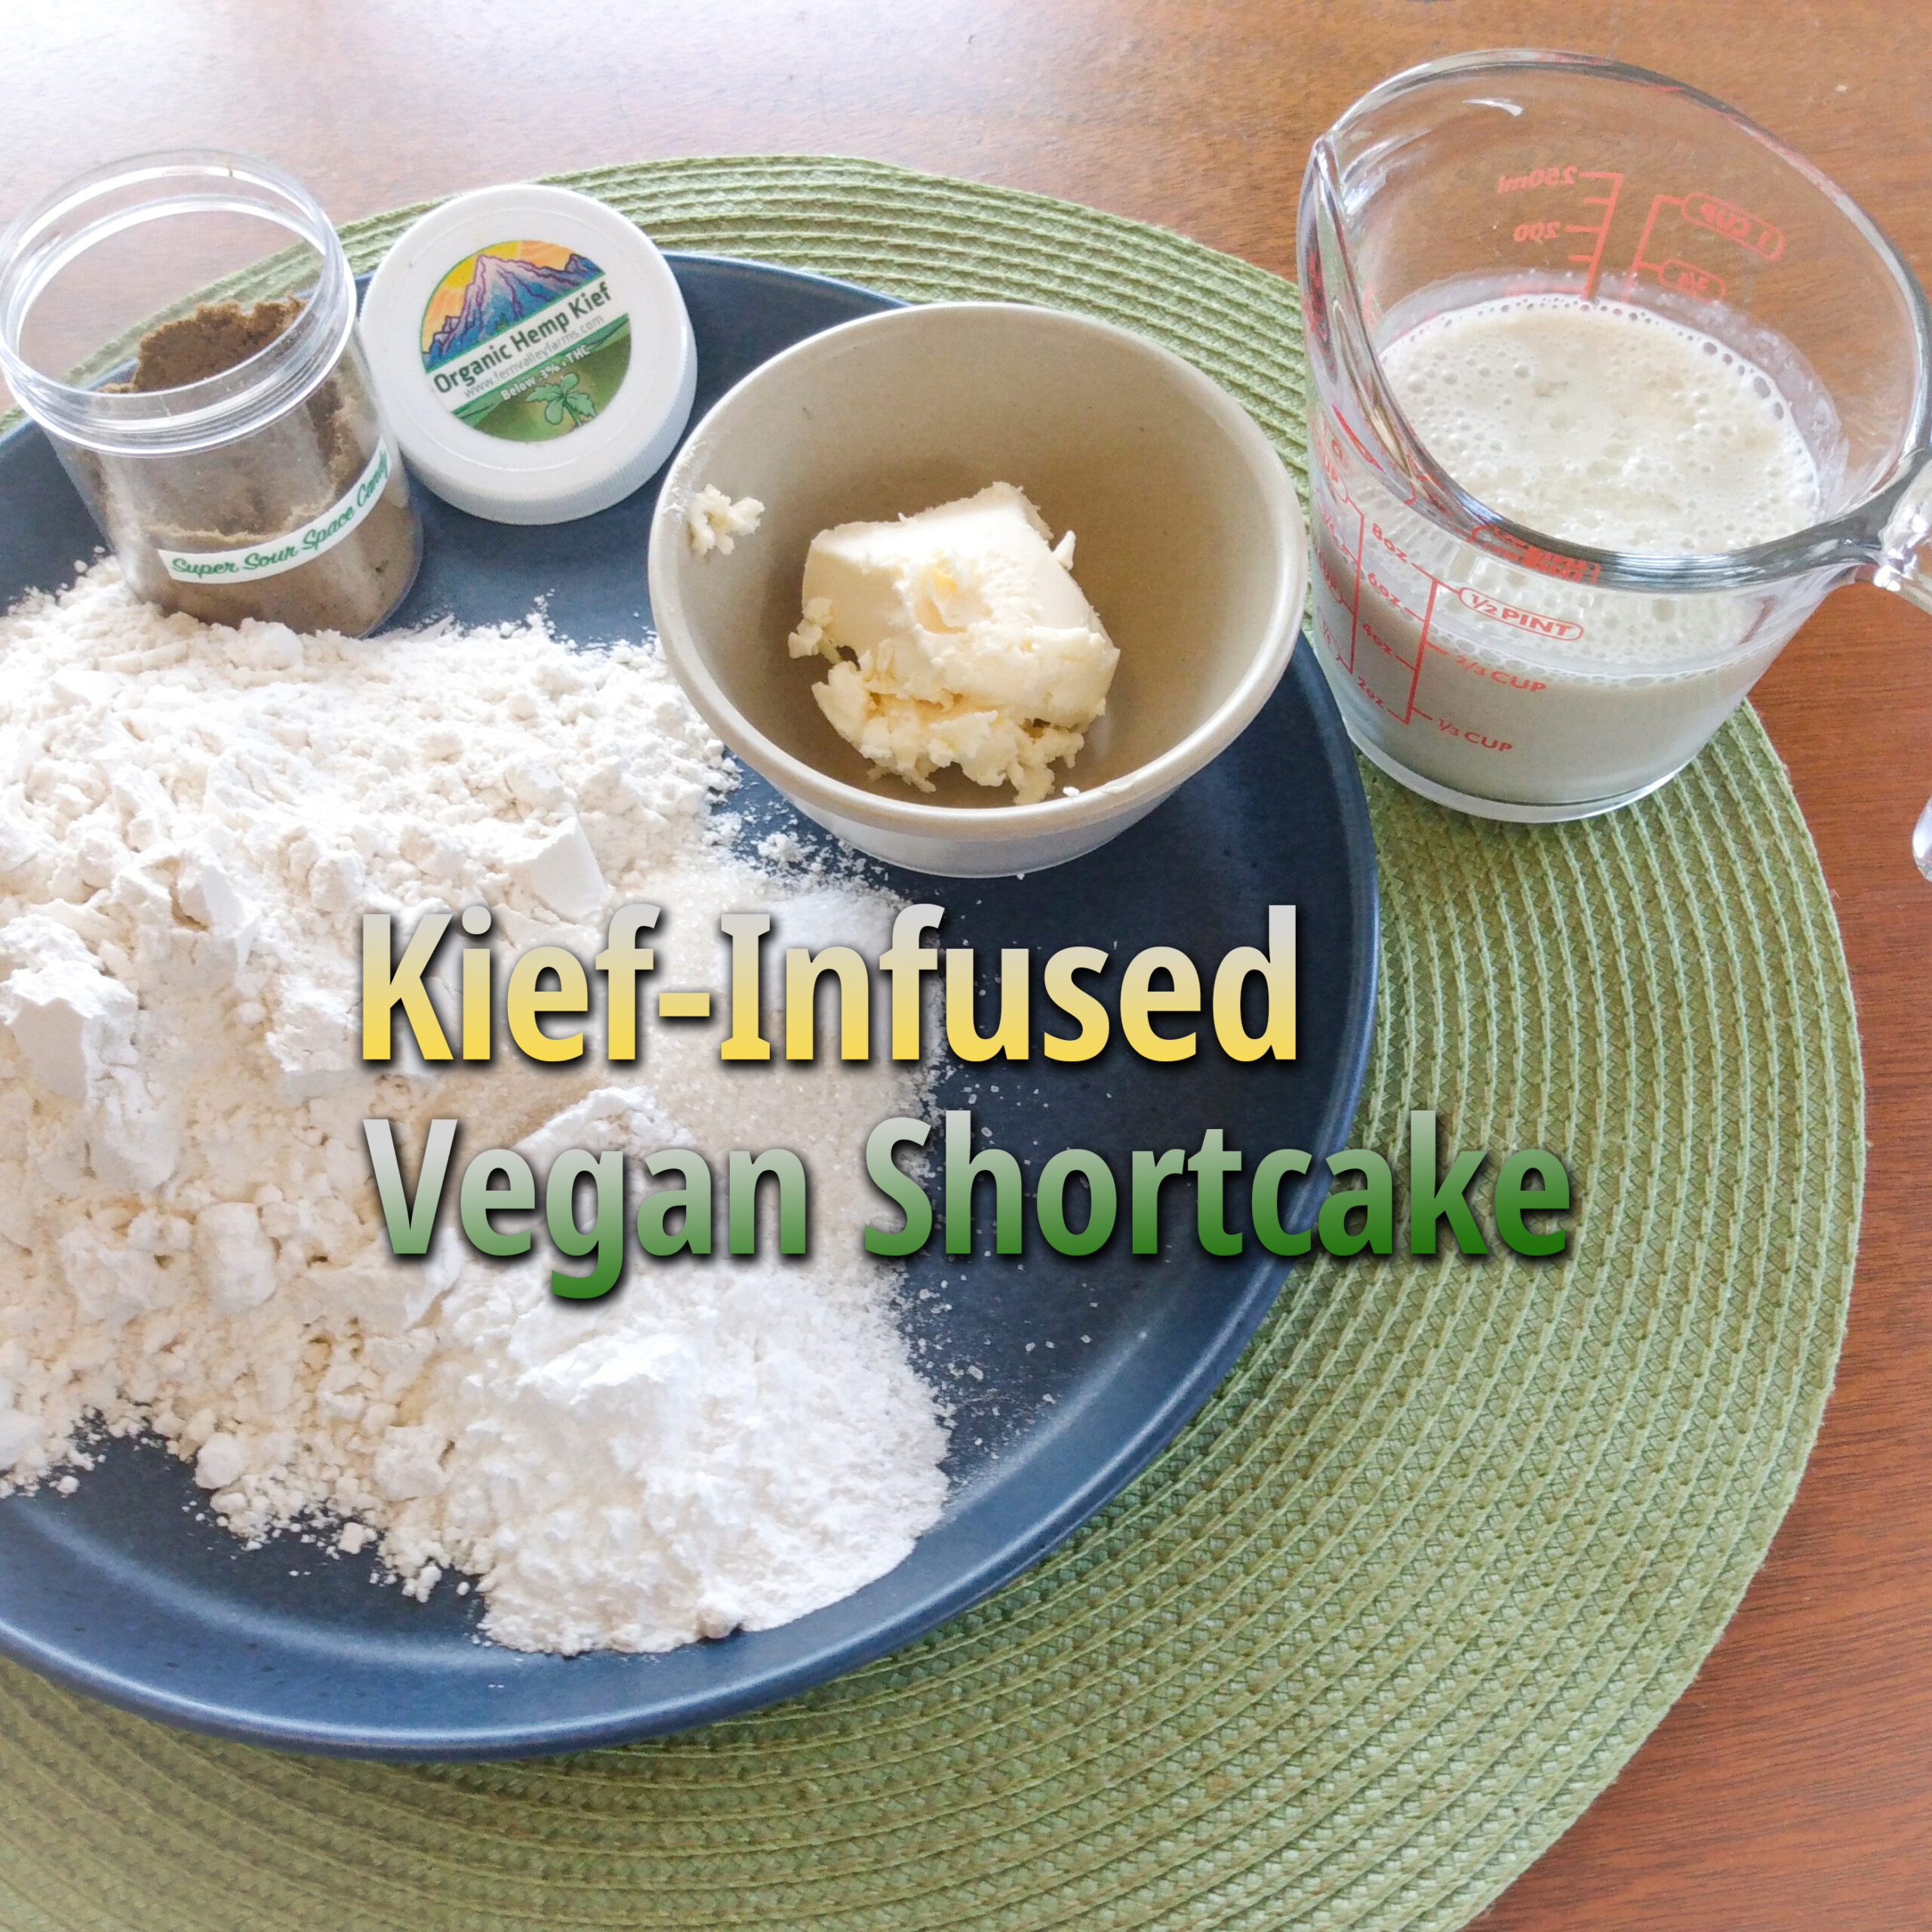 Kief-Infused Vegan Shortcake